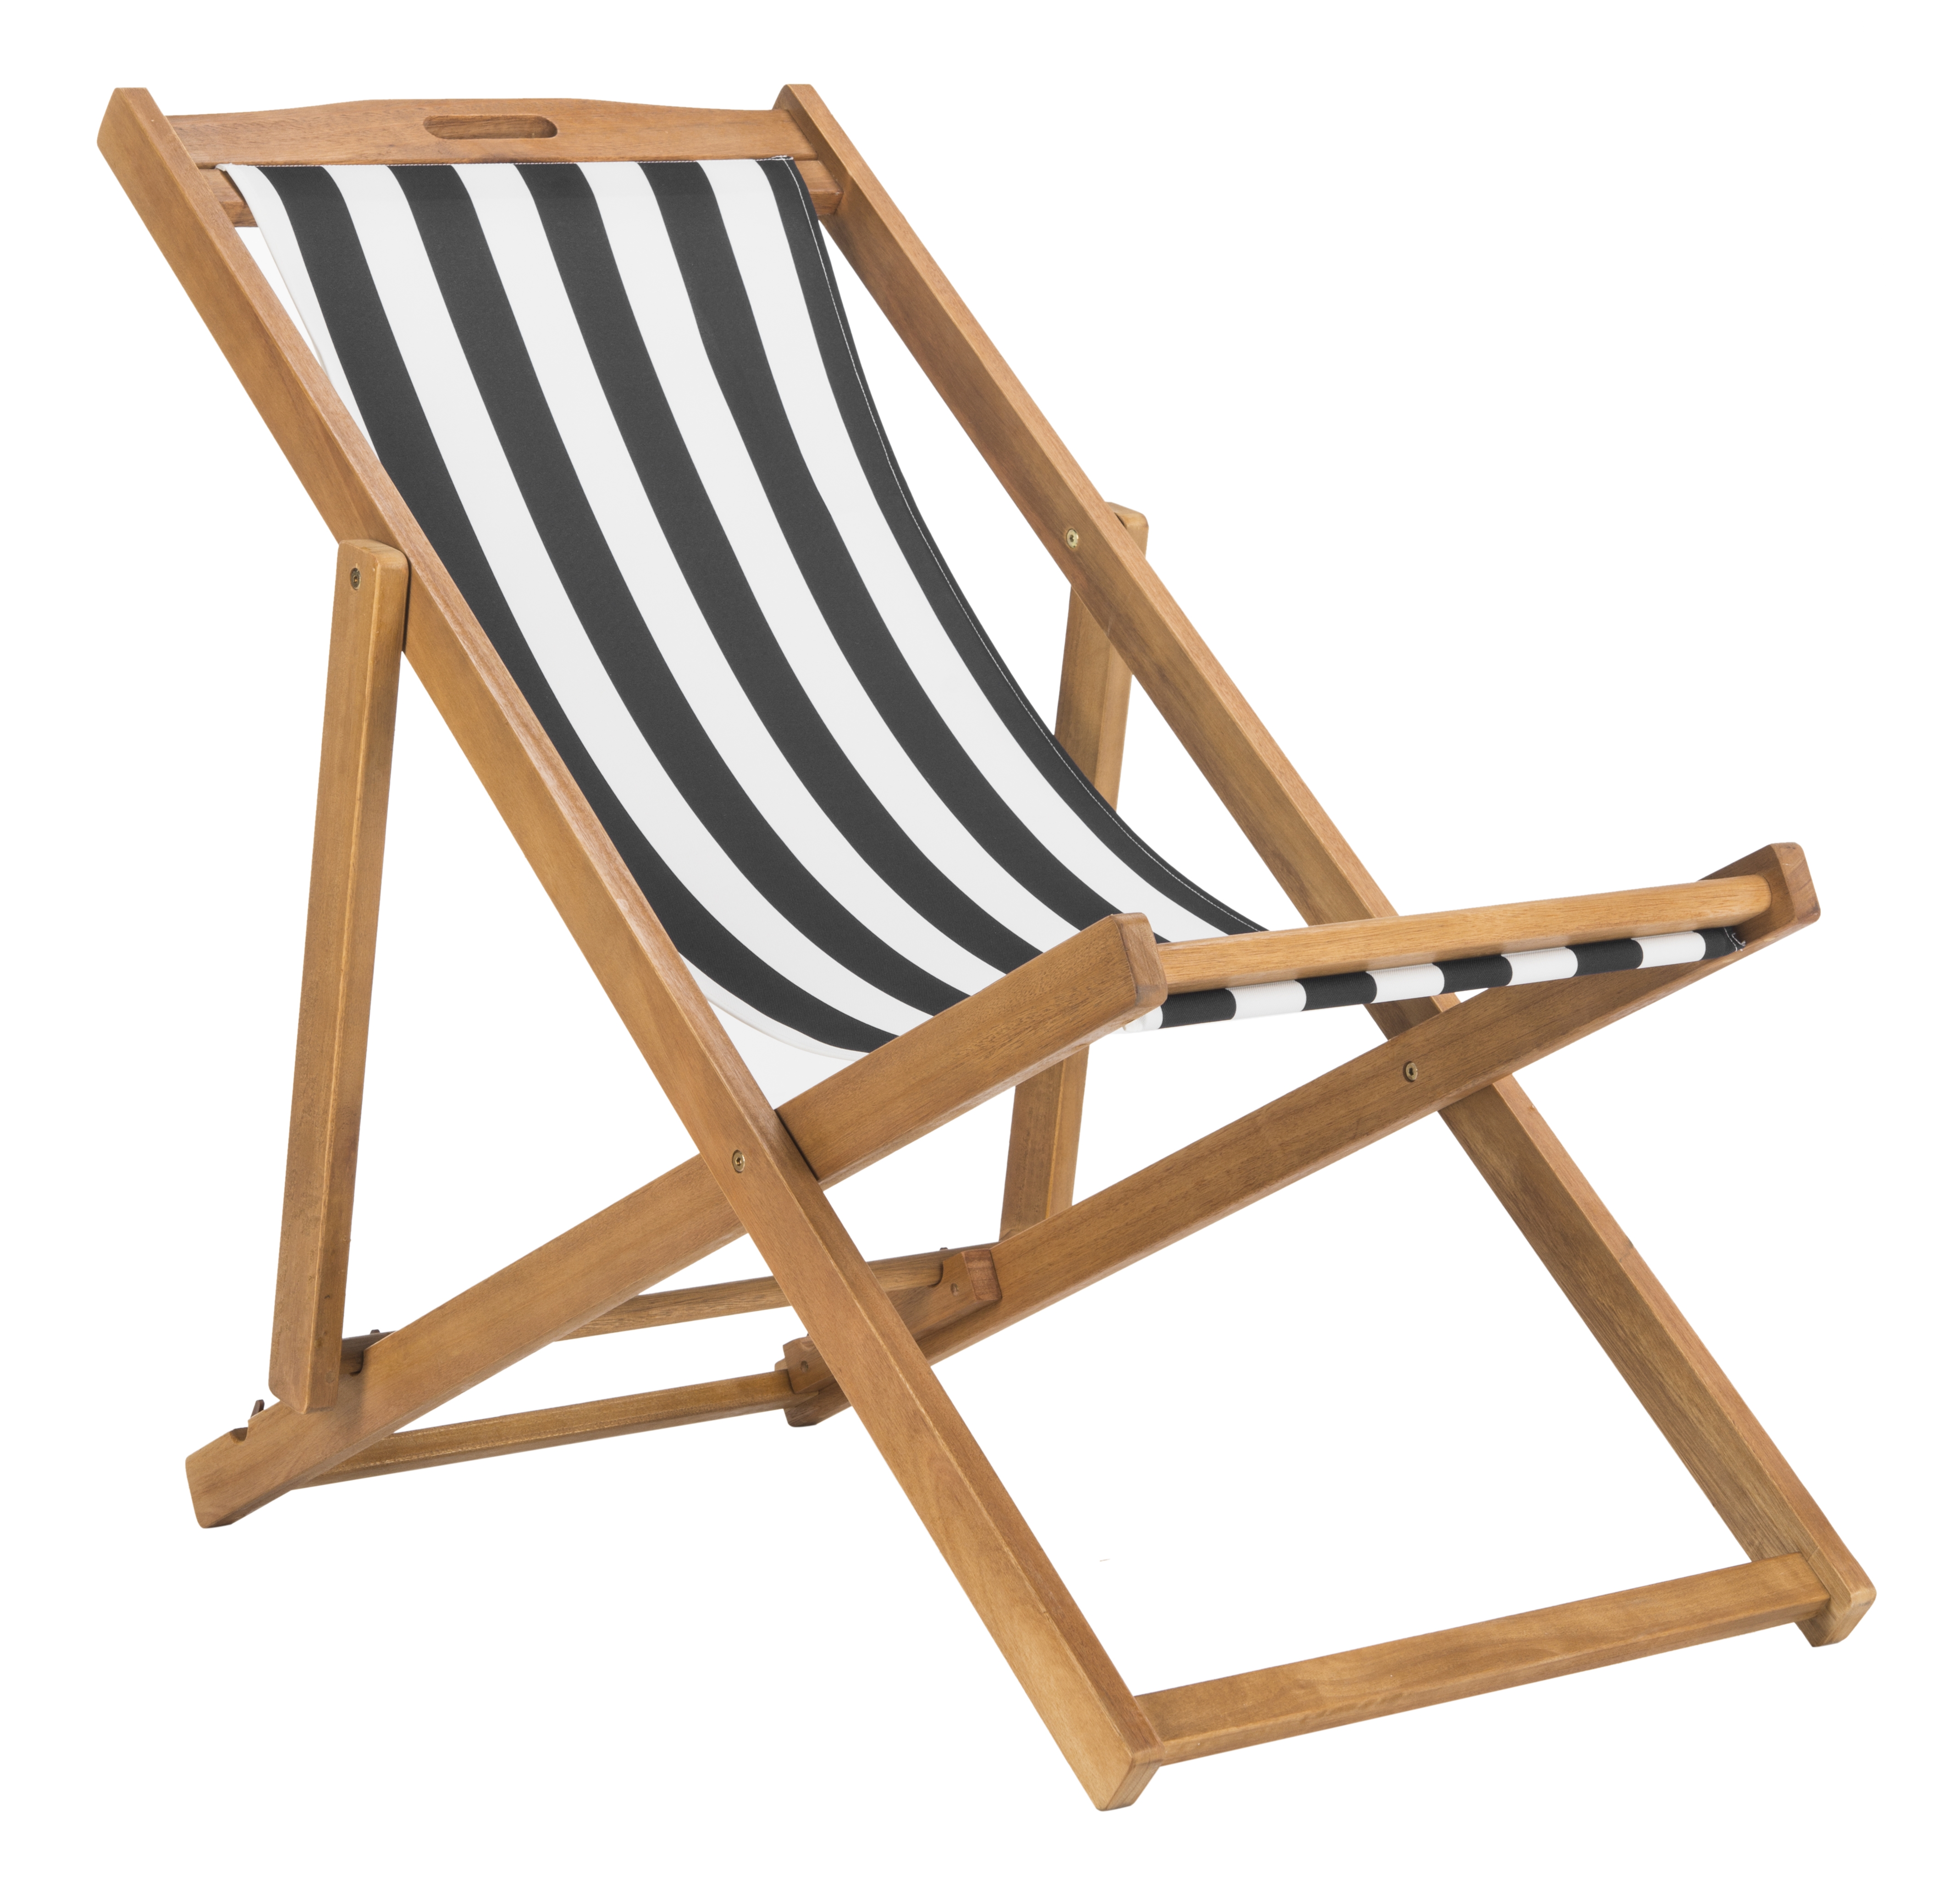 Loren Foldable Sling Chair - Natural/Black/White - Arlo Home - Image 2